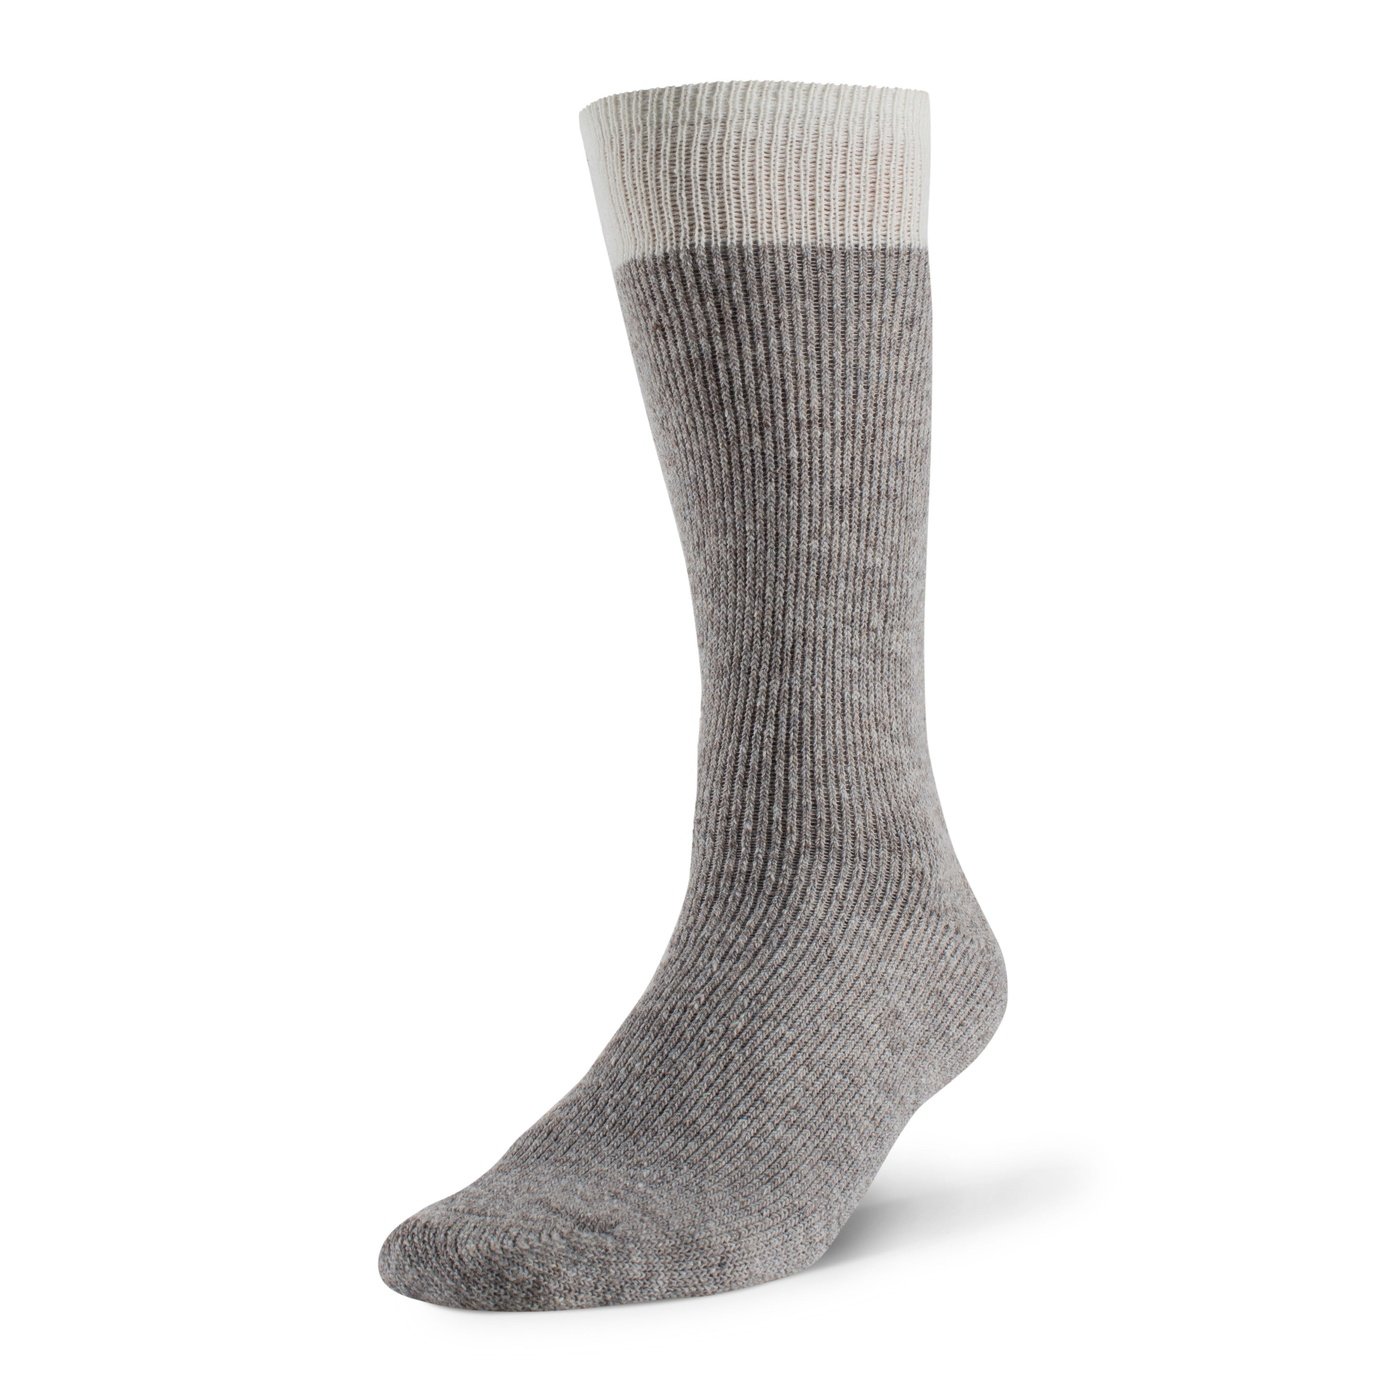 Duray - Boreal unisex socks